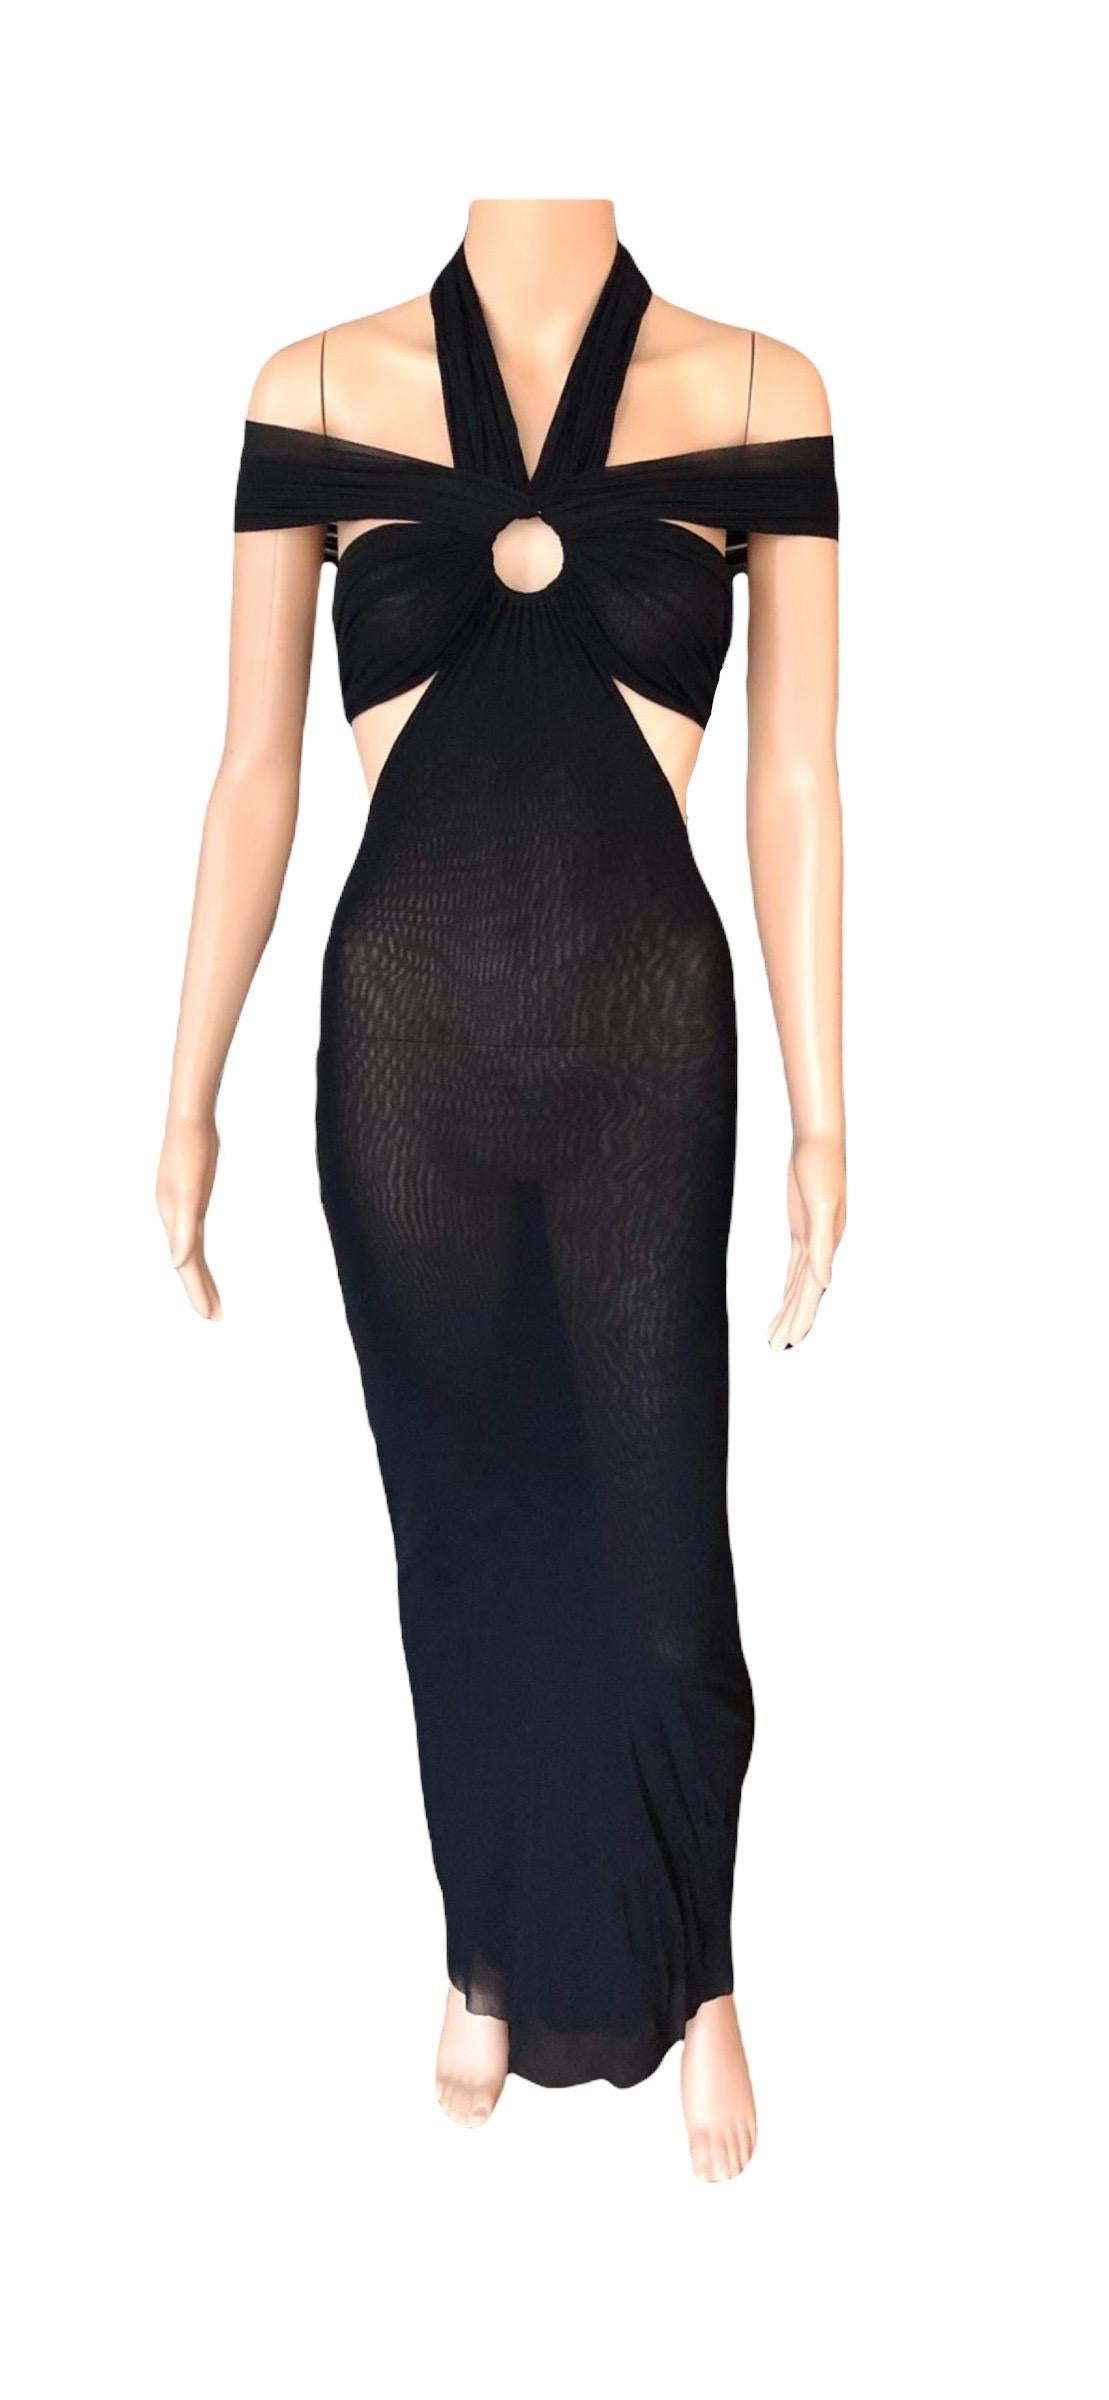 Jean Paul Gaultier Soleil S/S 1999 Cutout Sheer Mesh Bodycon Black Maxi Dress For Sale 2